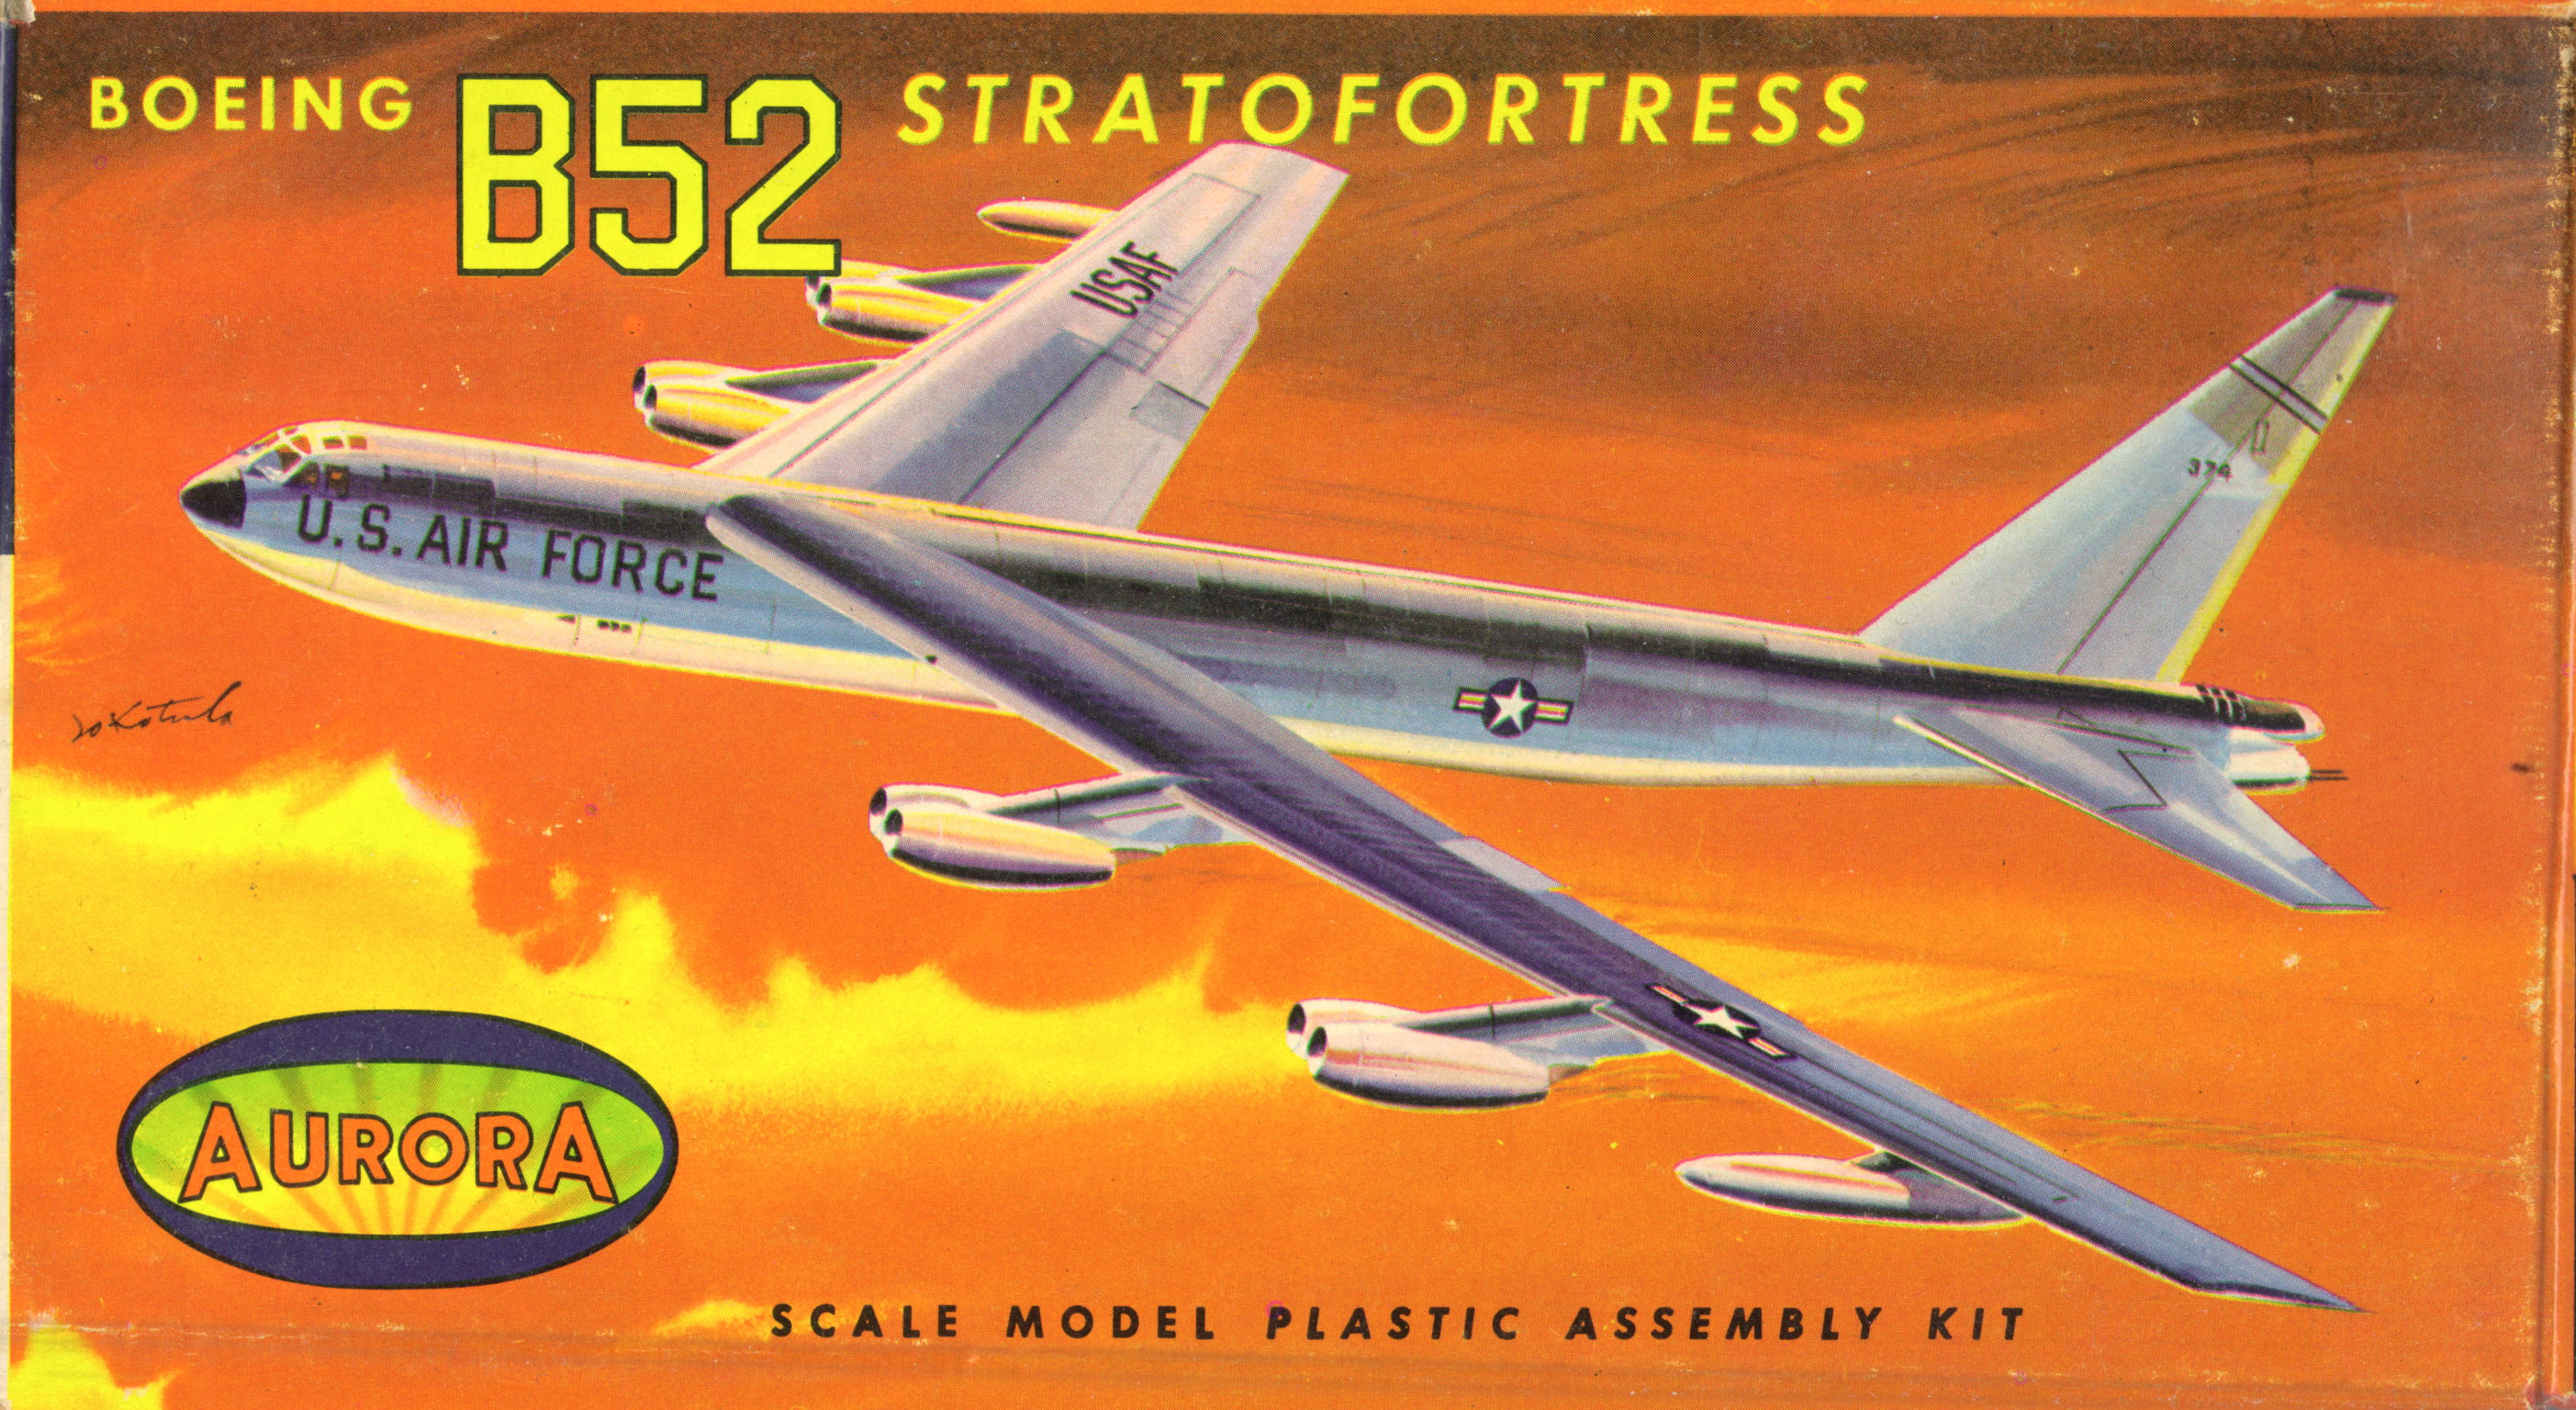 Коробка Aurora 494-70 Boeing B-52 Stratofortress, Aurora Plastic Corp, 1956